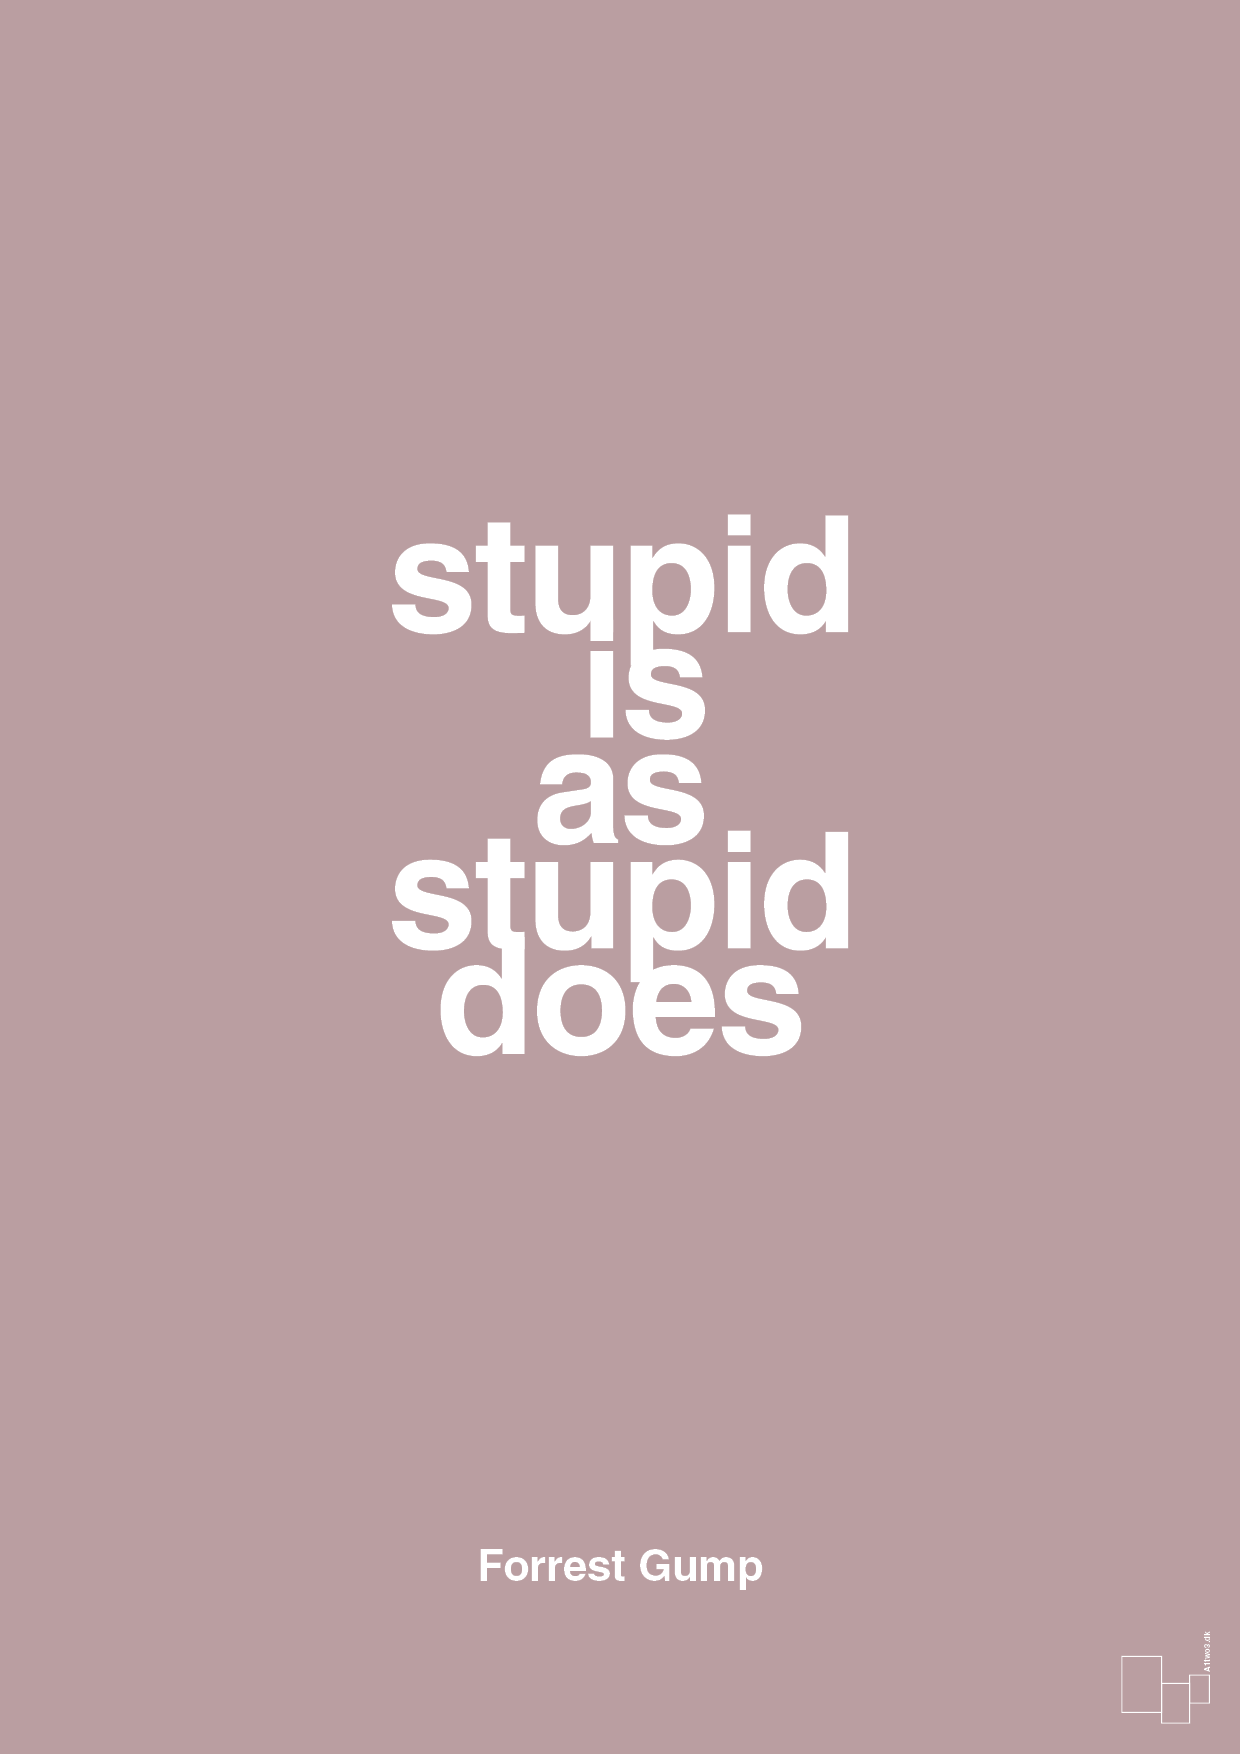 stupid is as stupid does - Plakat med Citater i Light Rose